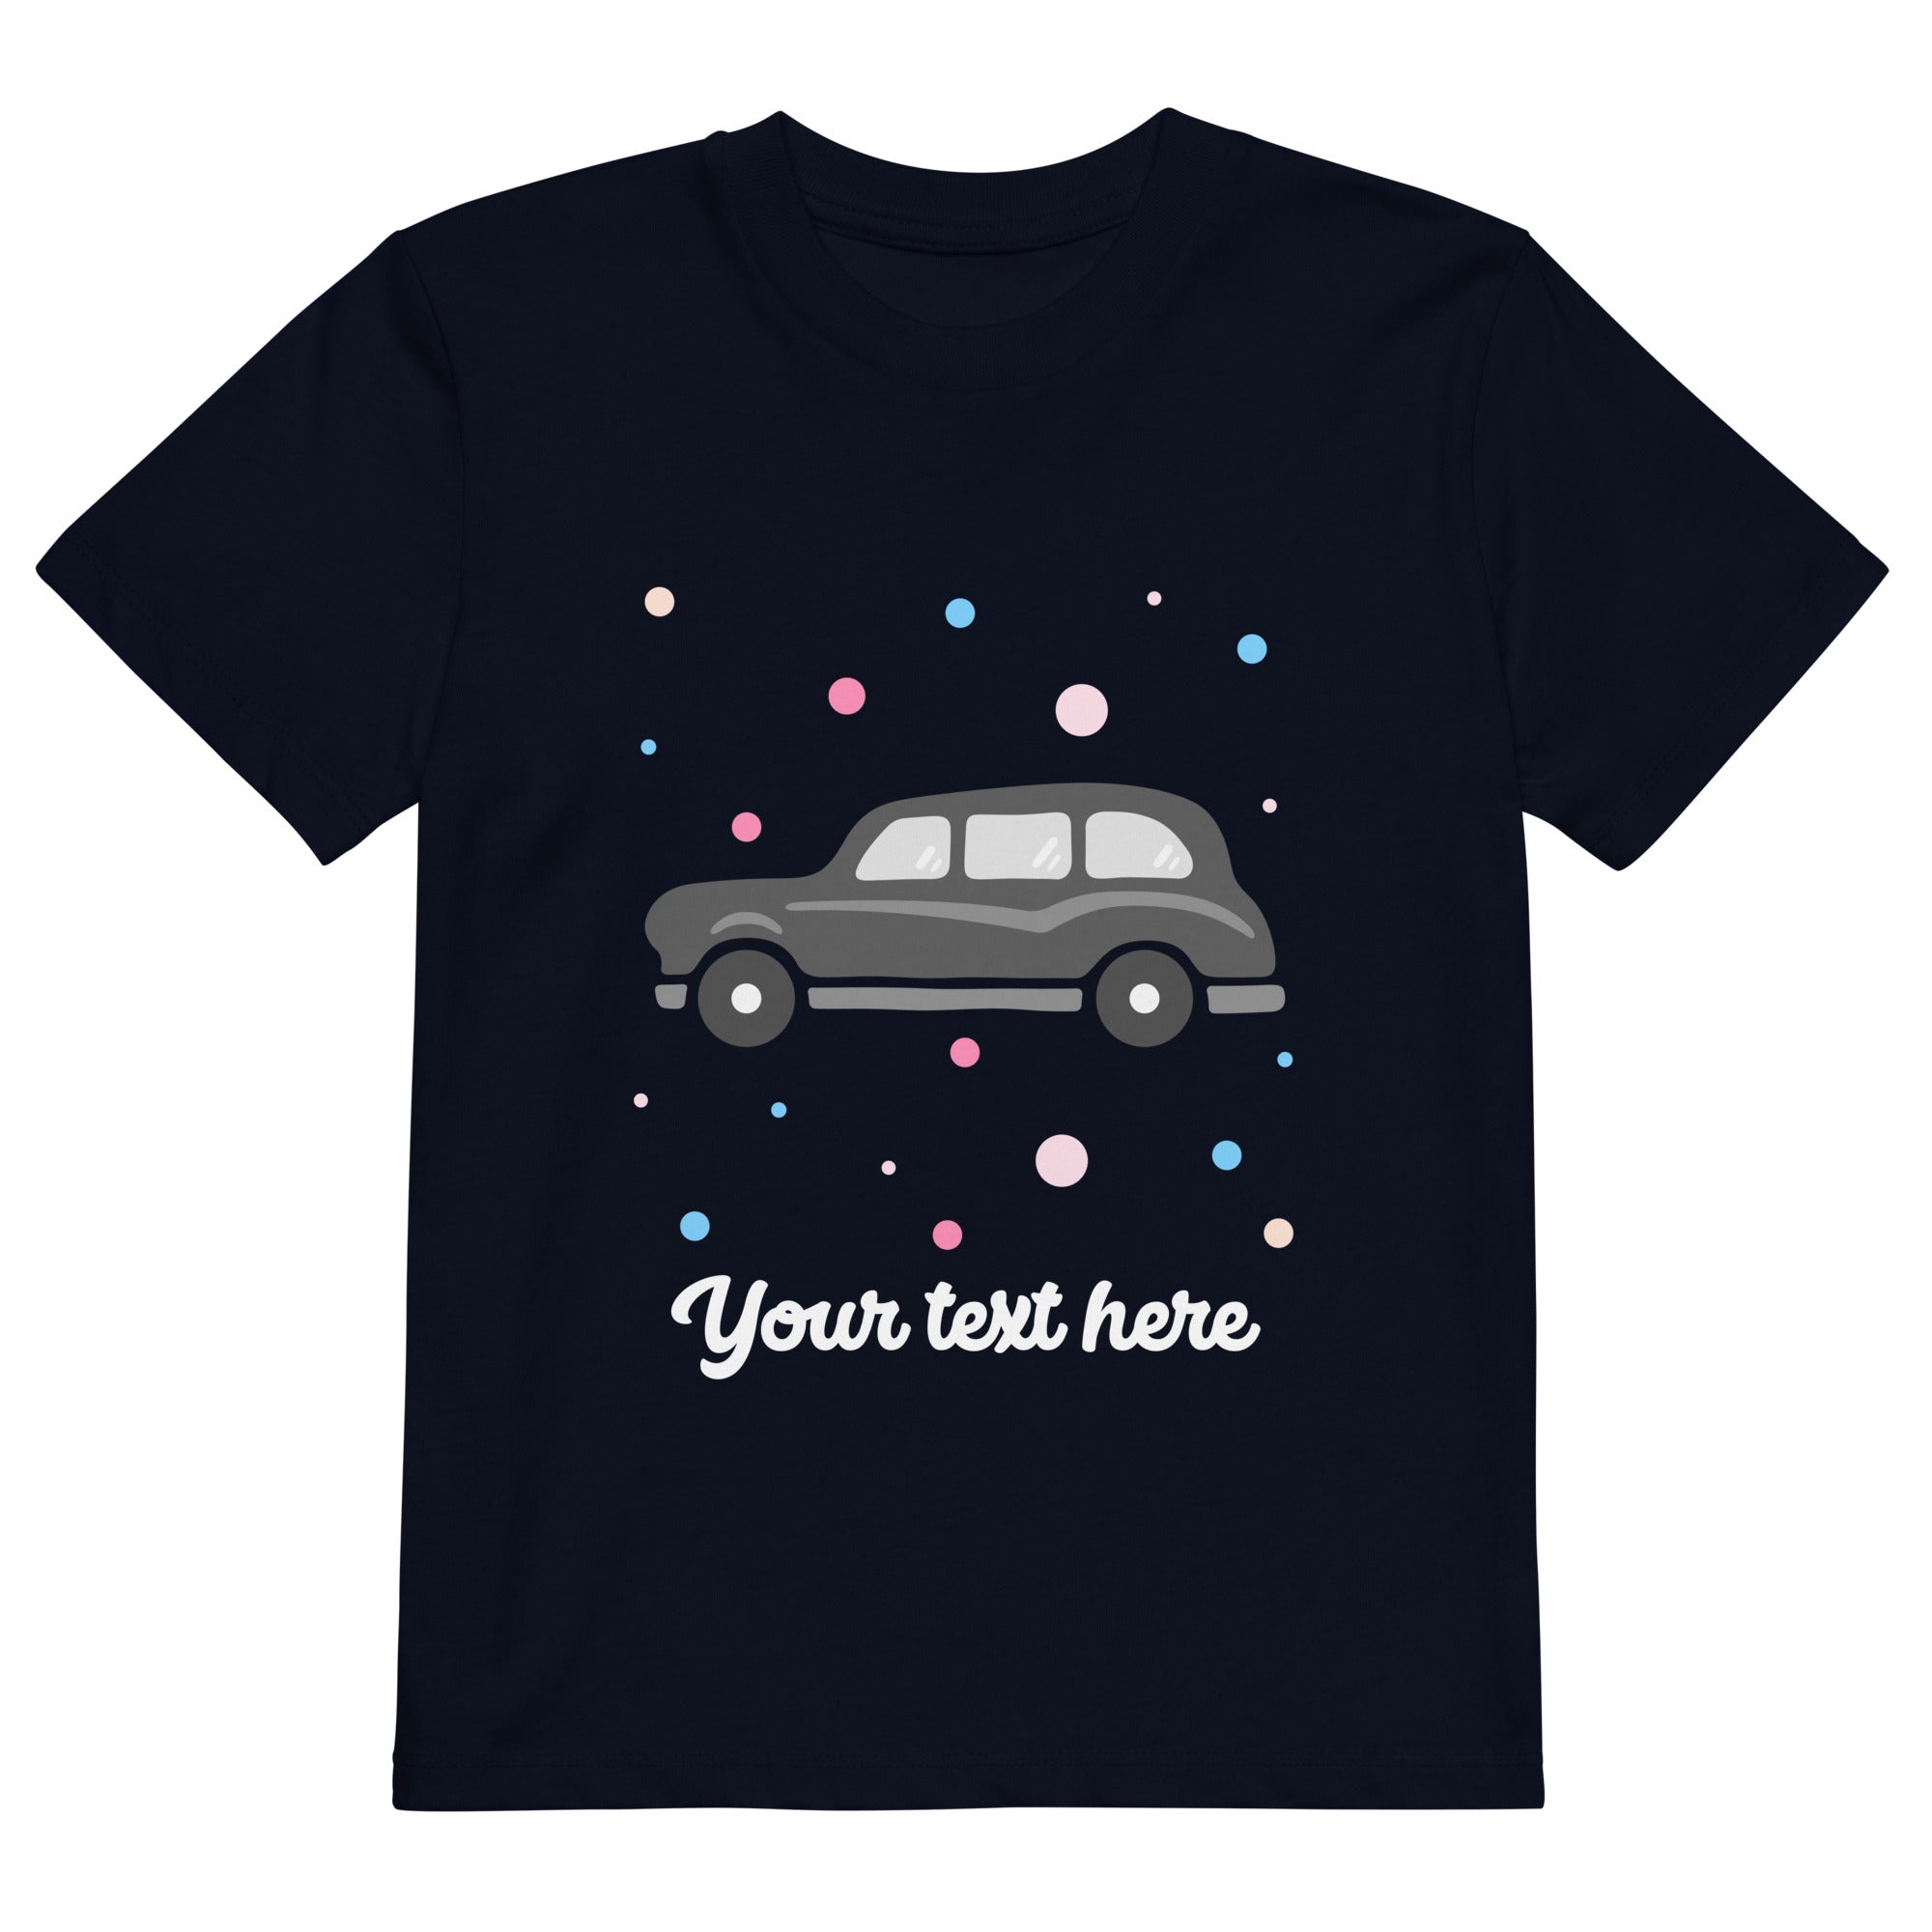 Personalised Custom Text - Organic Cotton Kids T-Shirt - London Doodles - Black Taxi - Navy 1